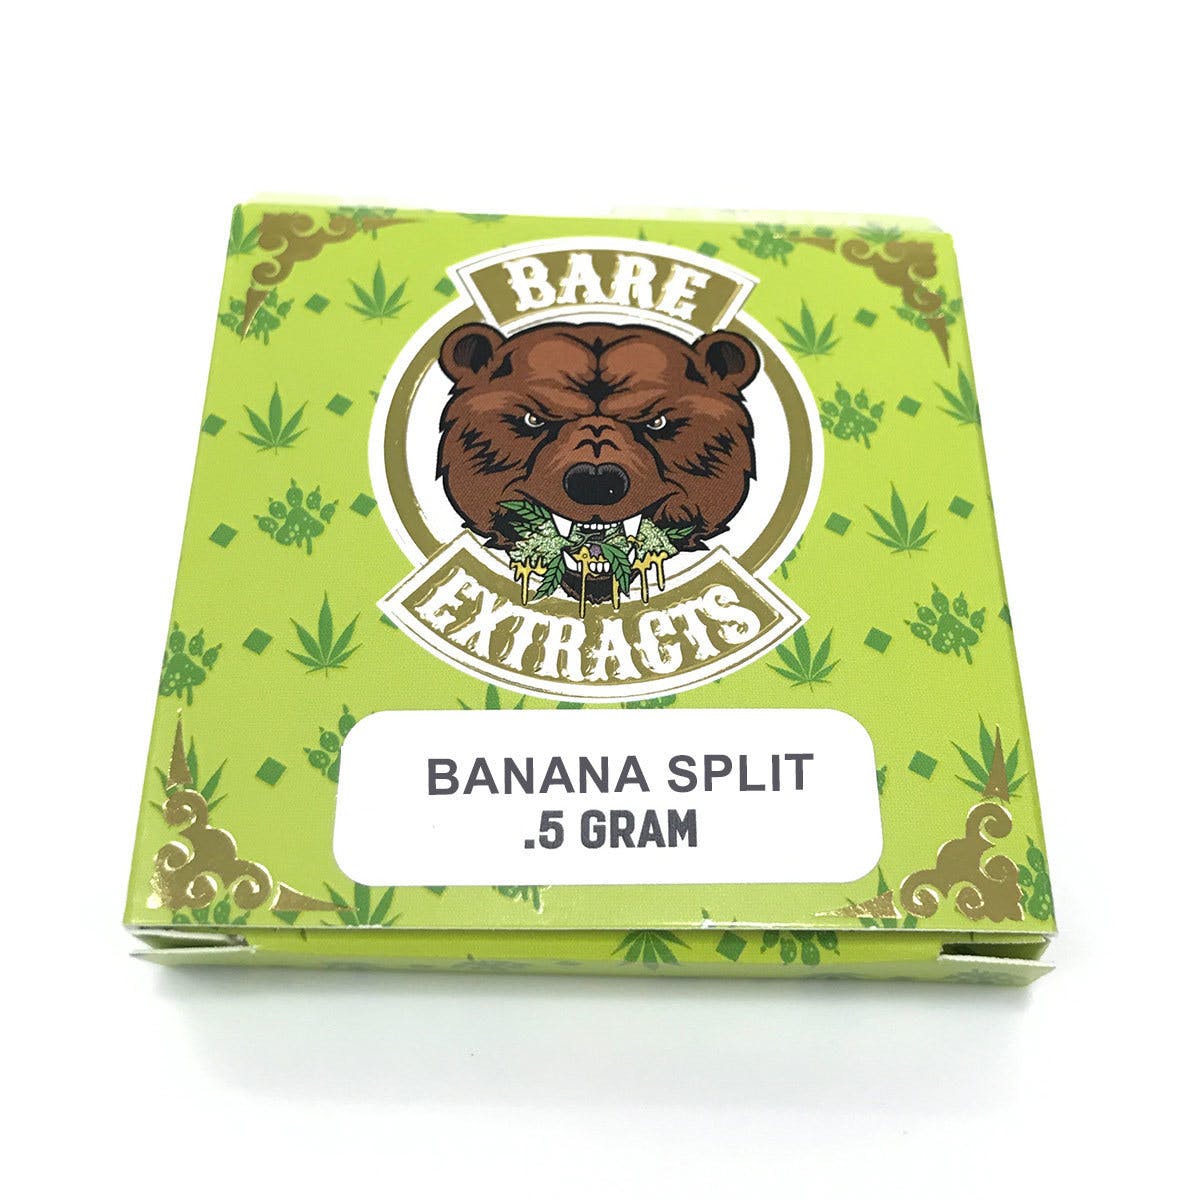 Bare Extracts Banana Split Premium Trim Run